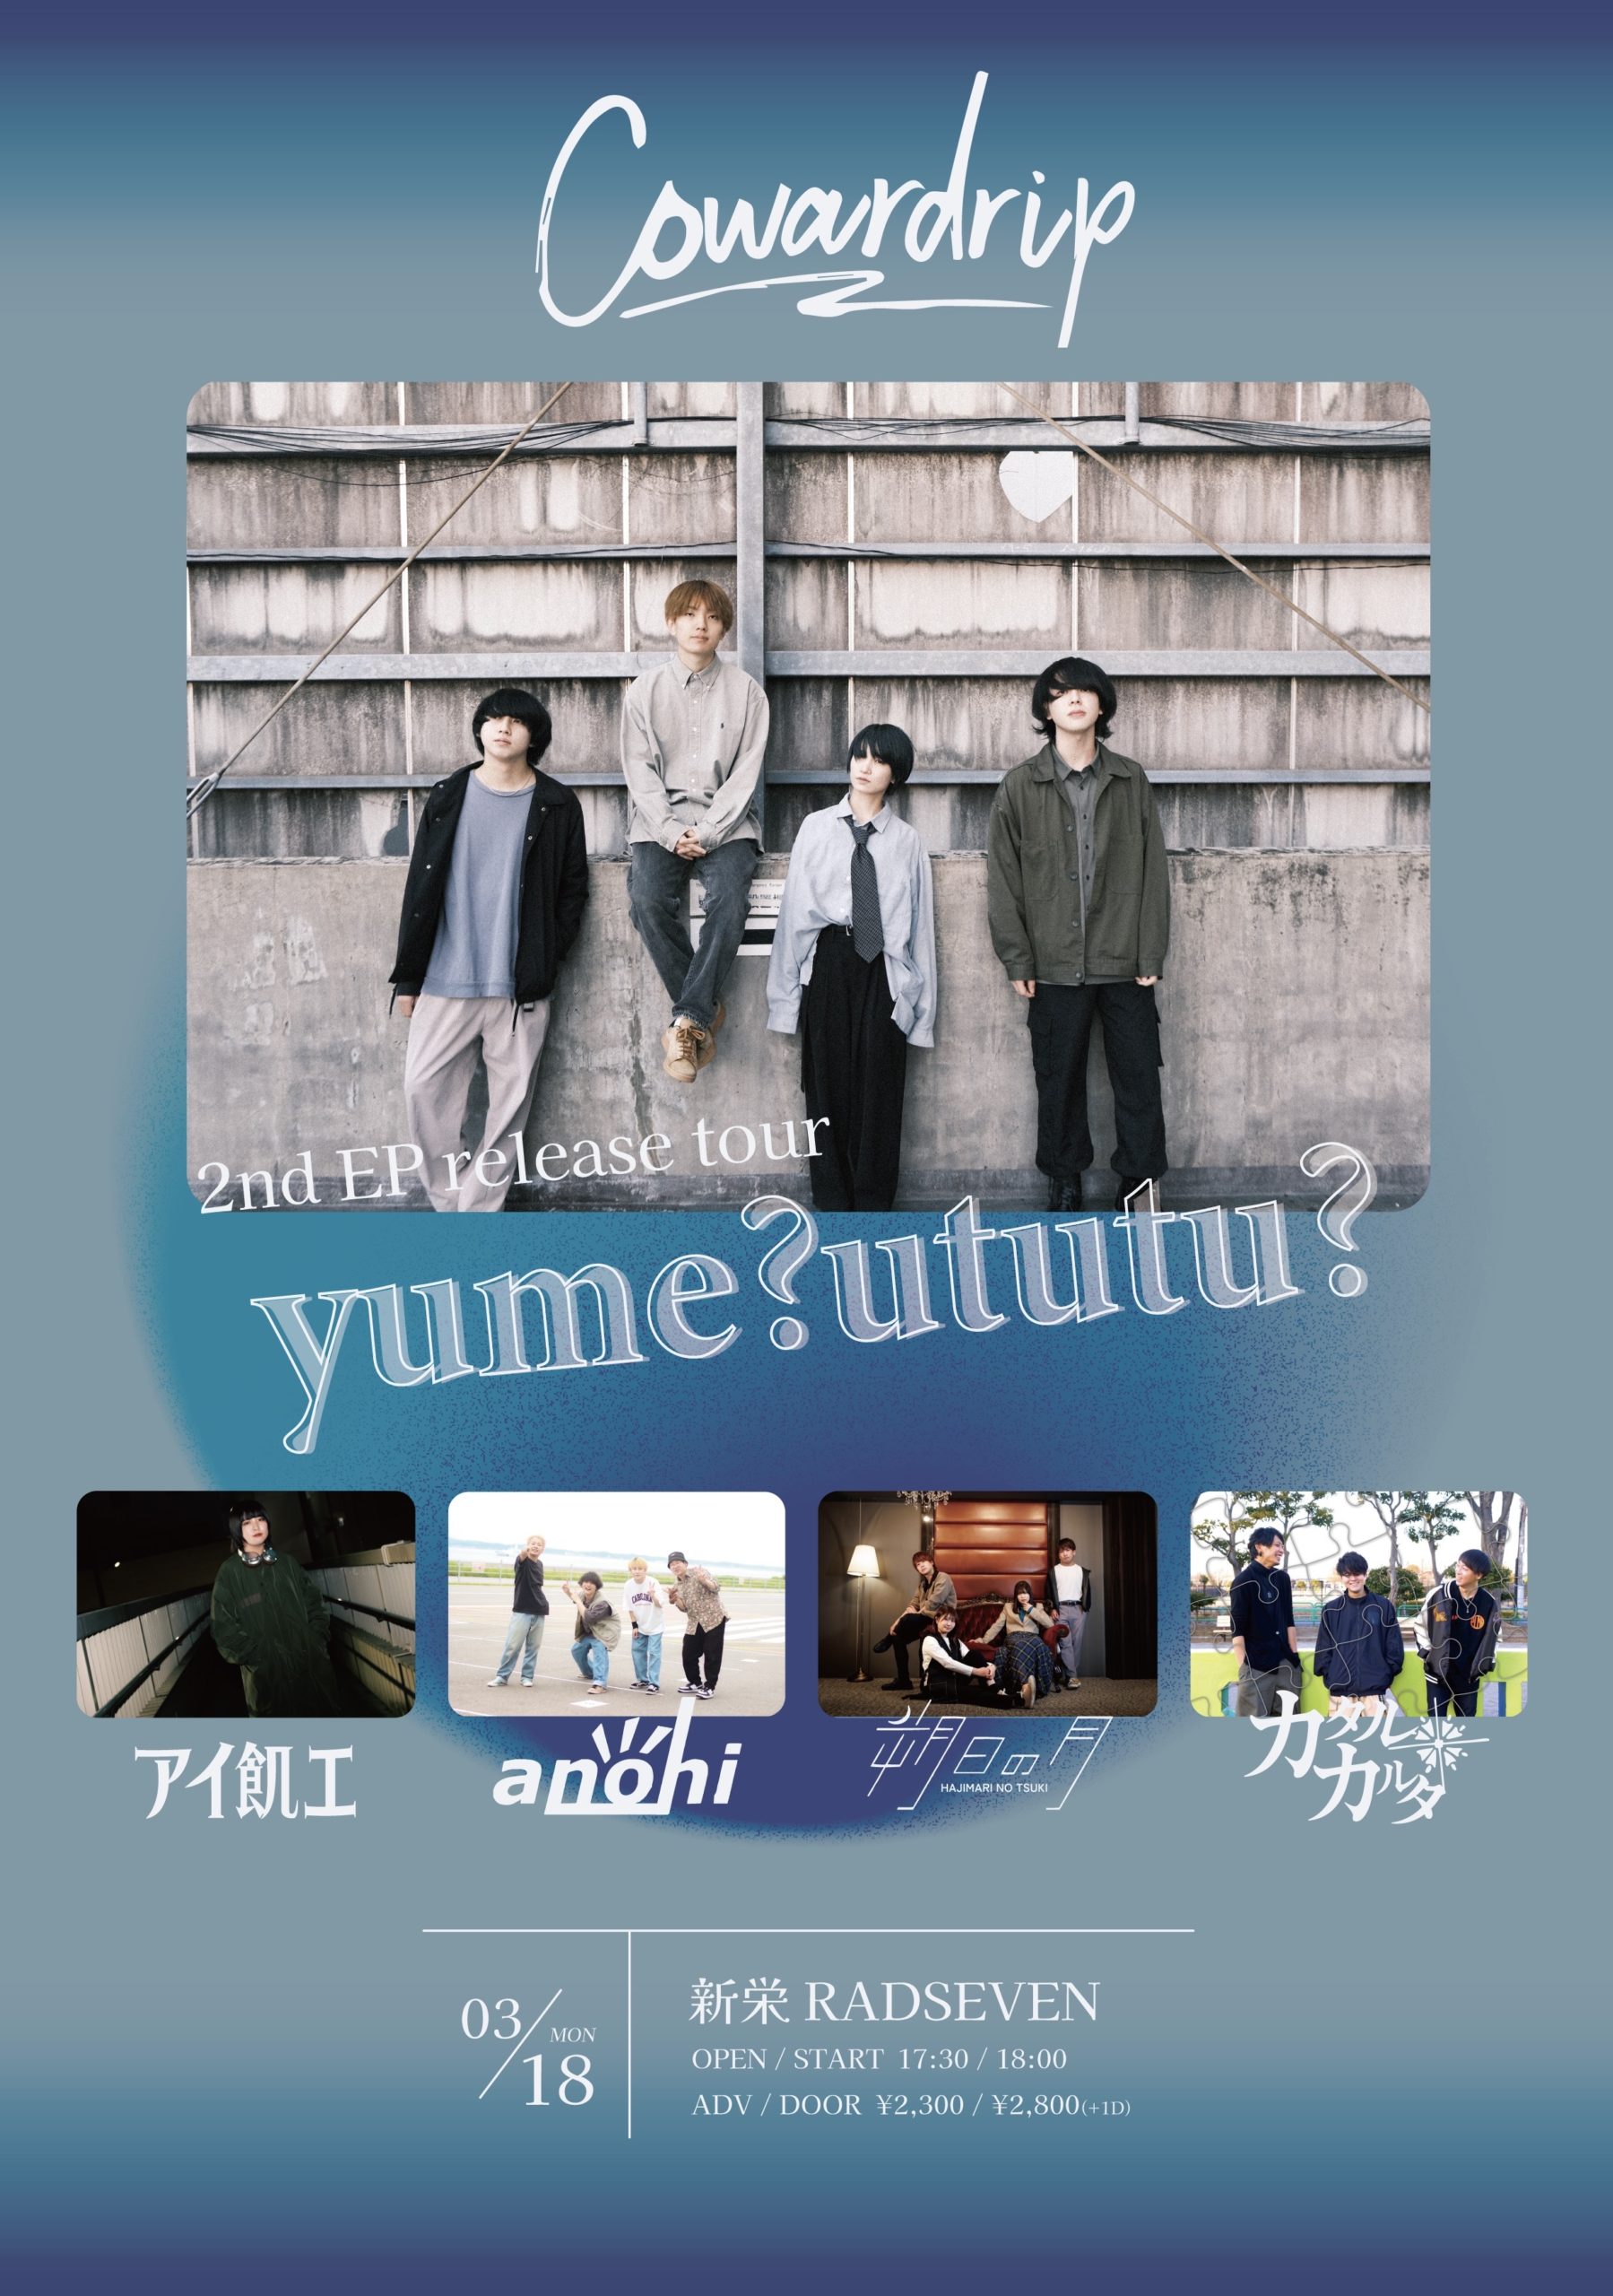 cowardrip 2nd EP release tour "yume?ututu?"